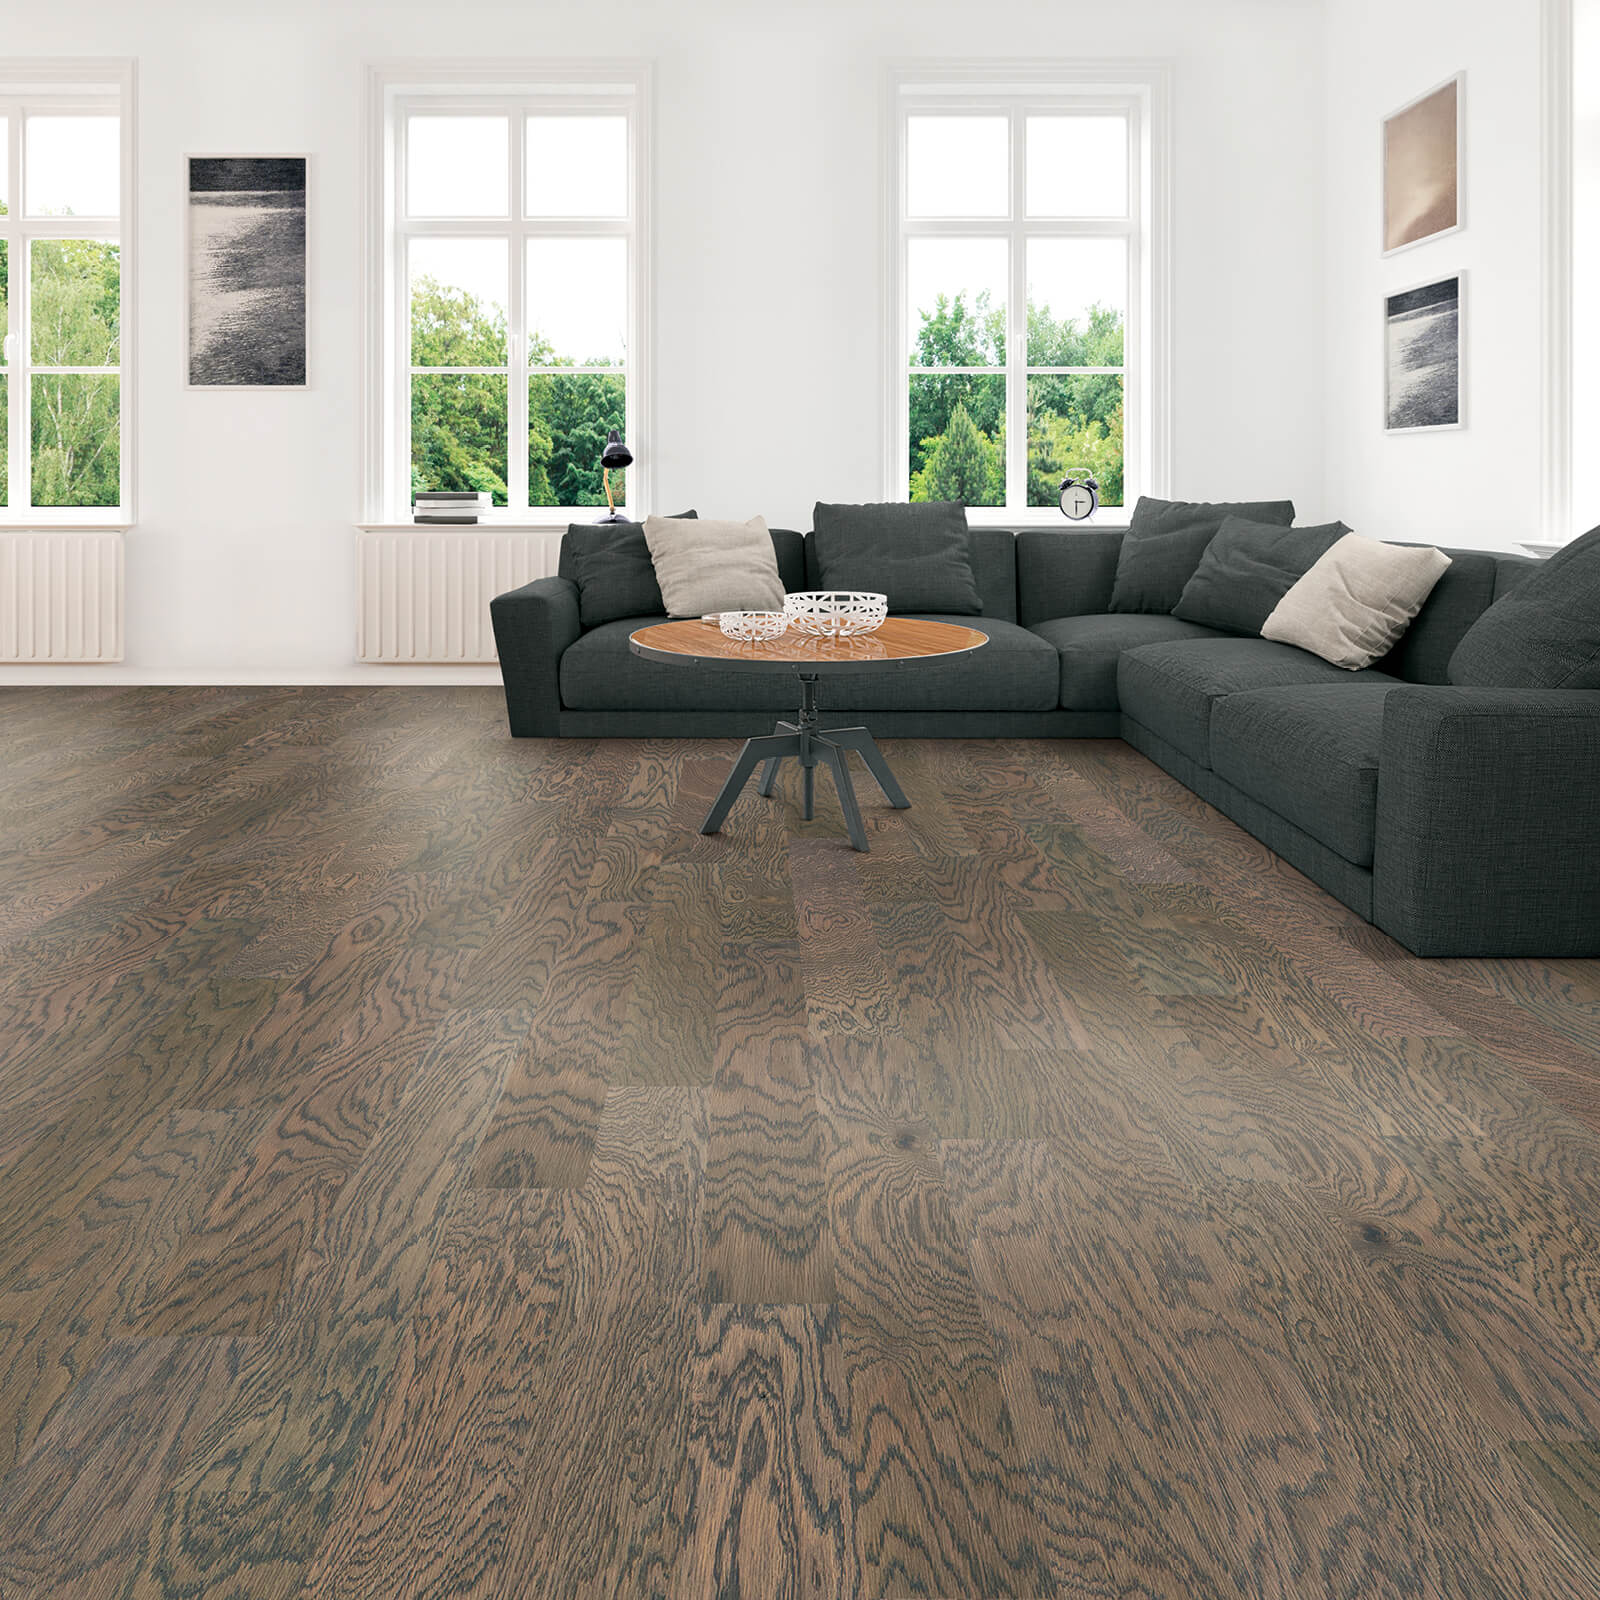 Hardwood flooring in living room | Rockwall Floor and Paint